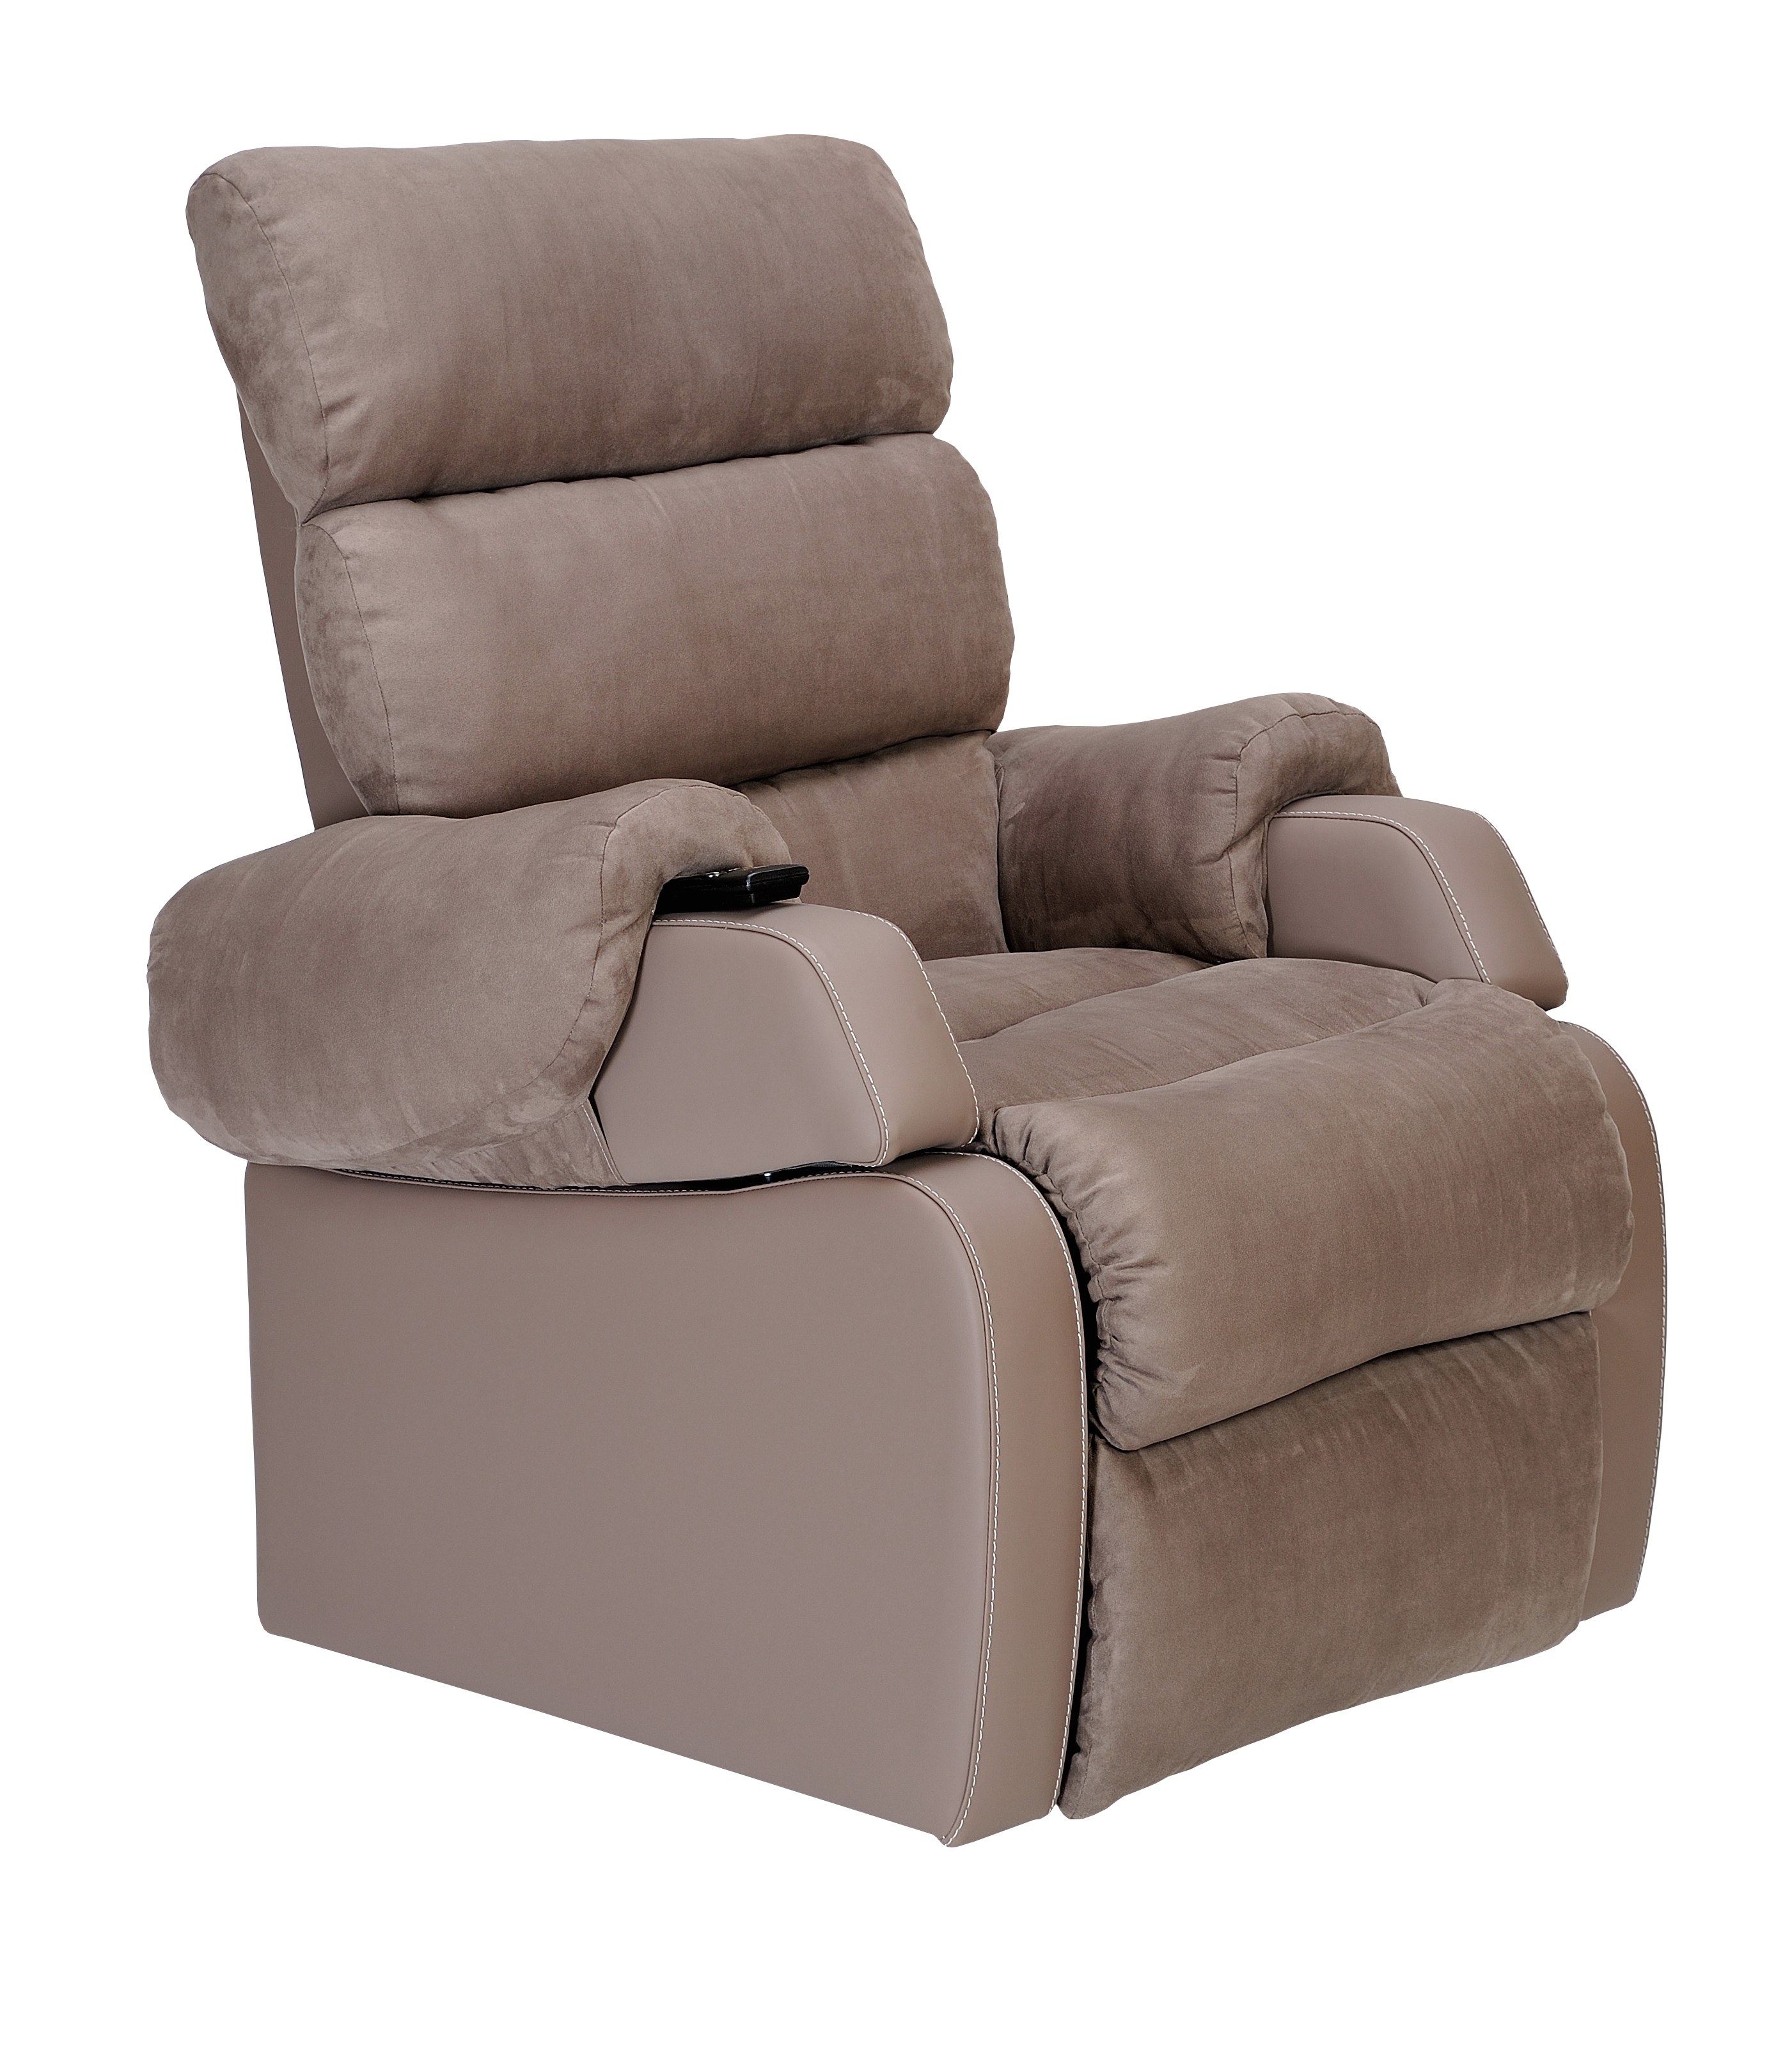 Ultra Comfort Lift Chair Cocoon Recliner Lift Chair Single Motor